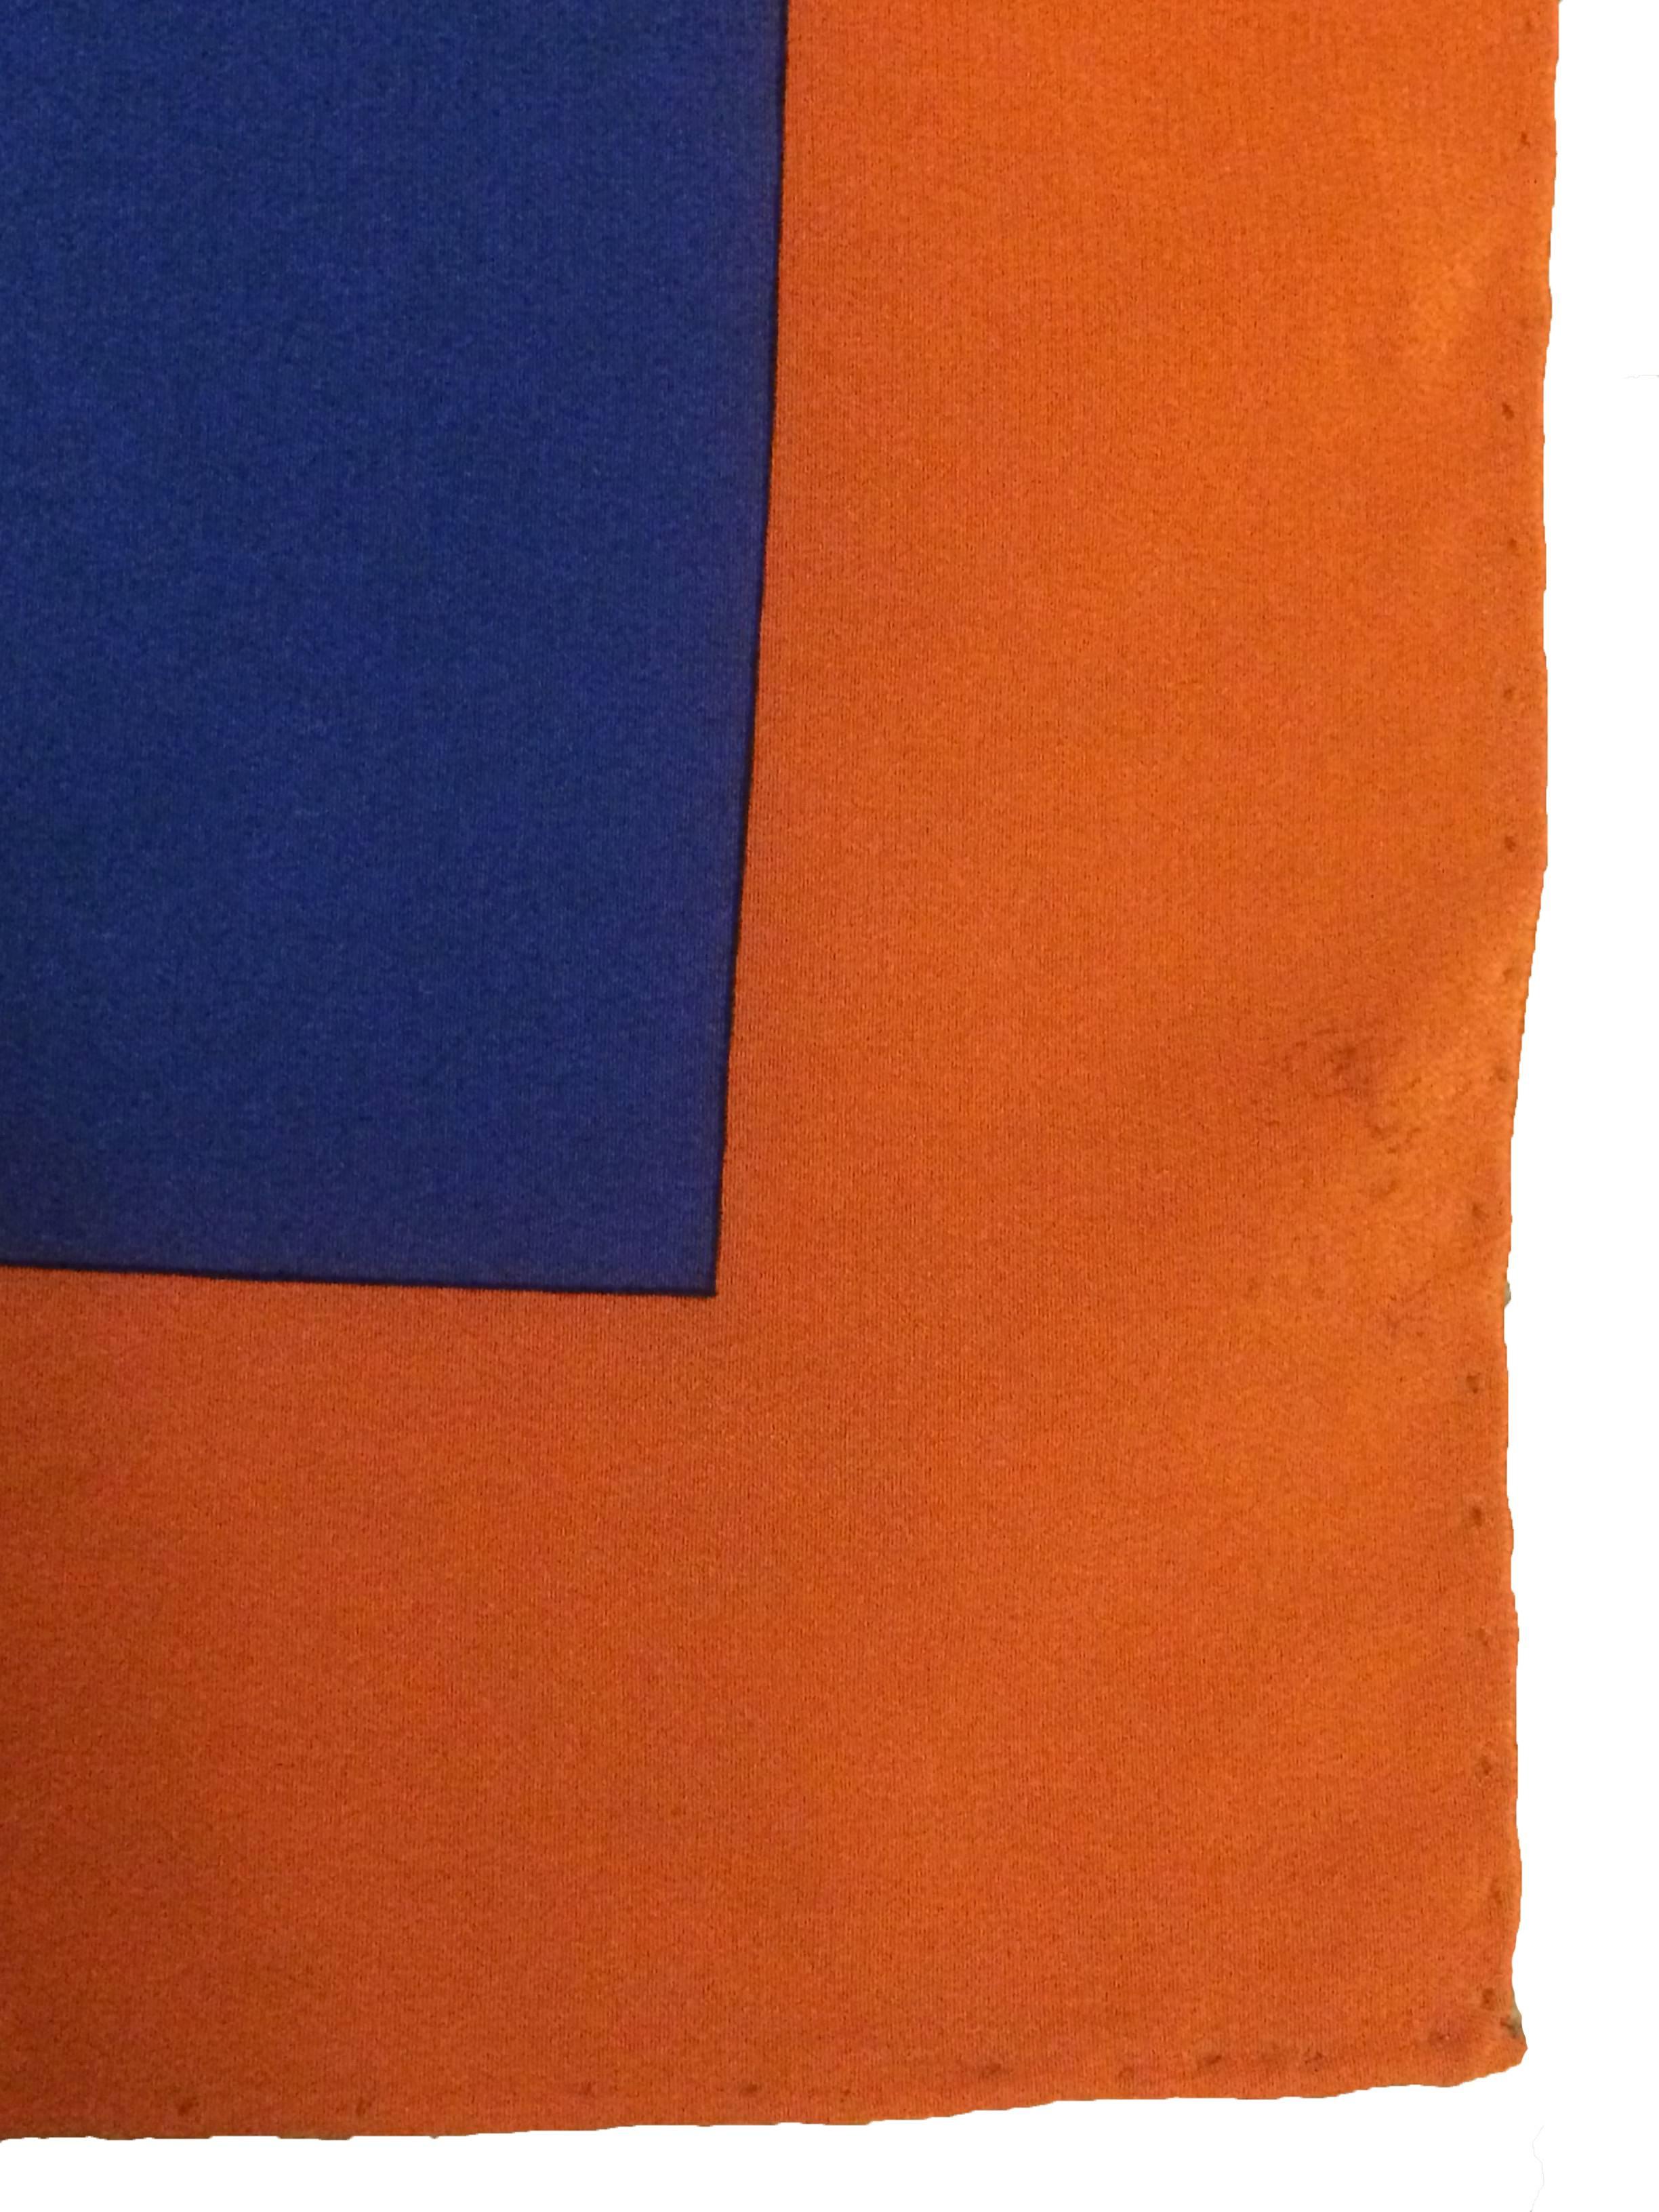 Women's Moschino 90s This is a Kashmir Mark Question Mark Silk Scarf Blue Orange